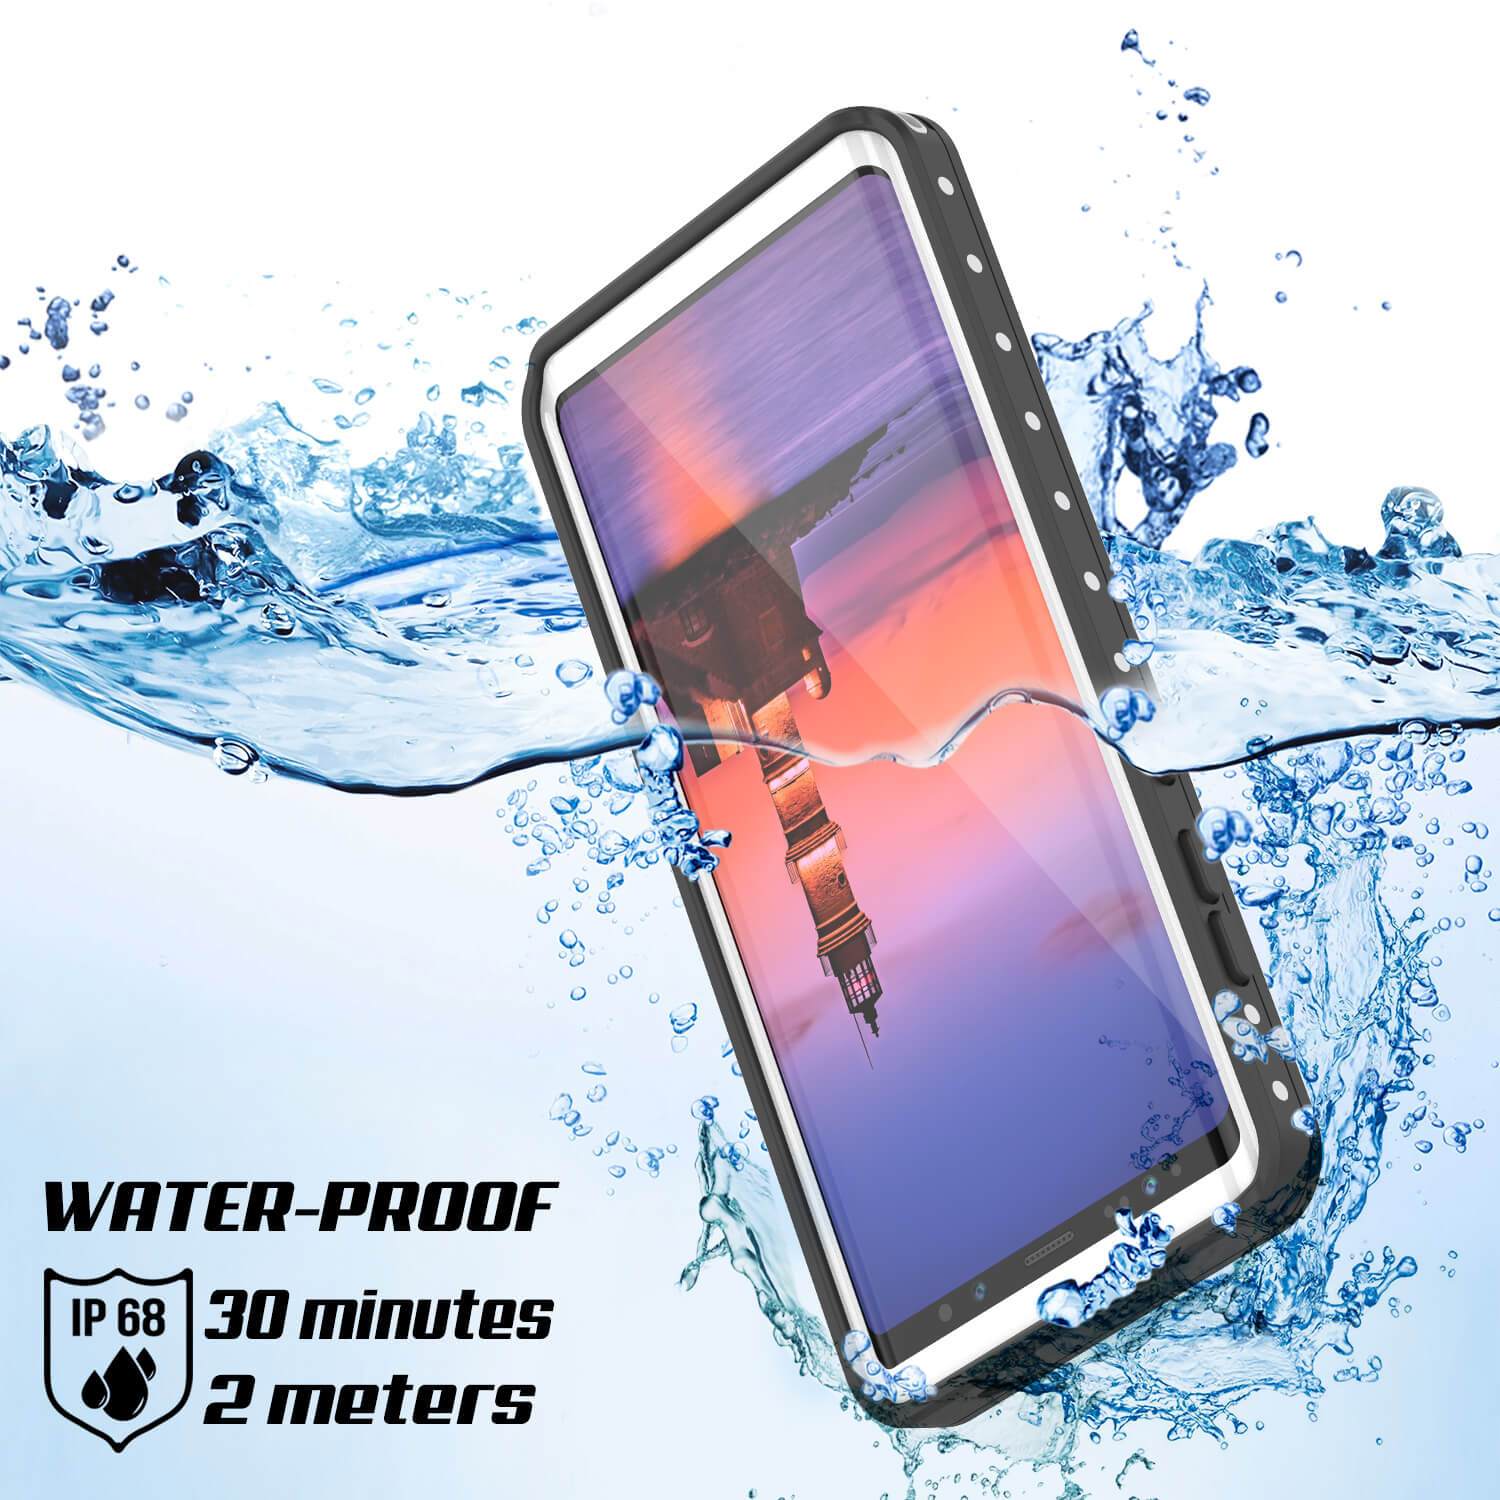 Galaxy Note 9 Waterproof Case, PunkСase StudStar White Thin 6.6ft Underwater Shock/Snow Proof